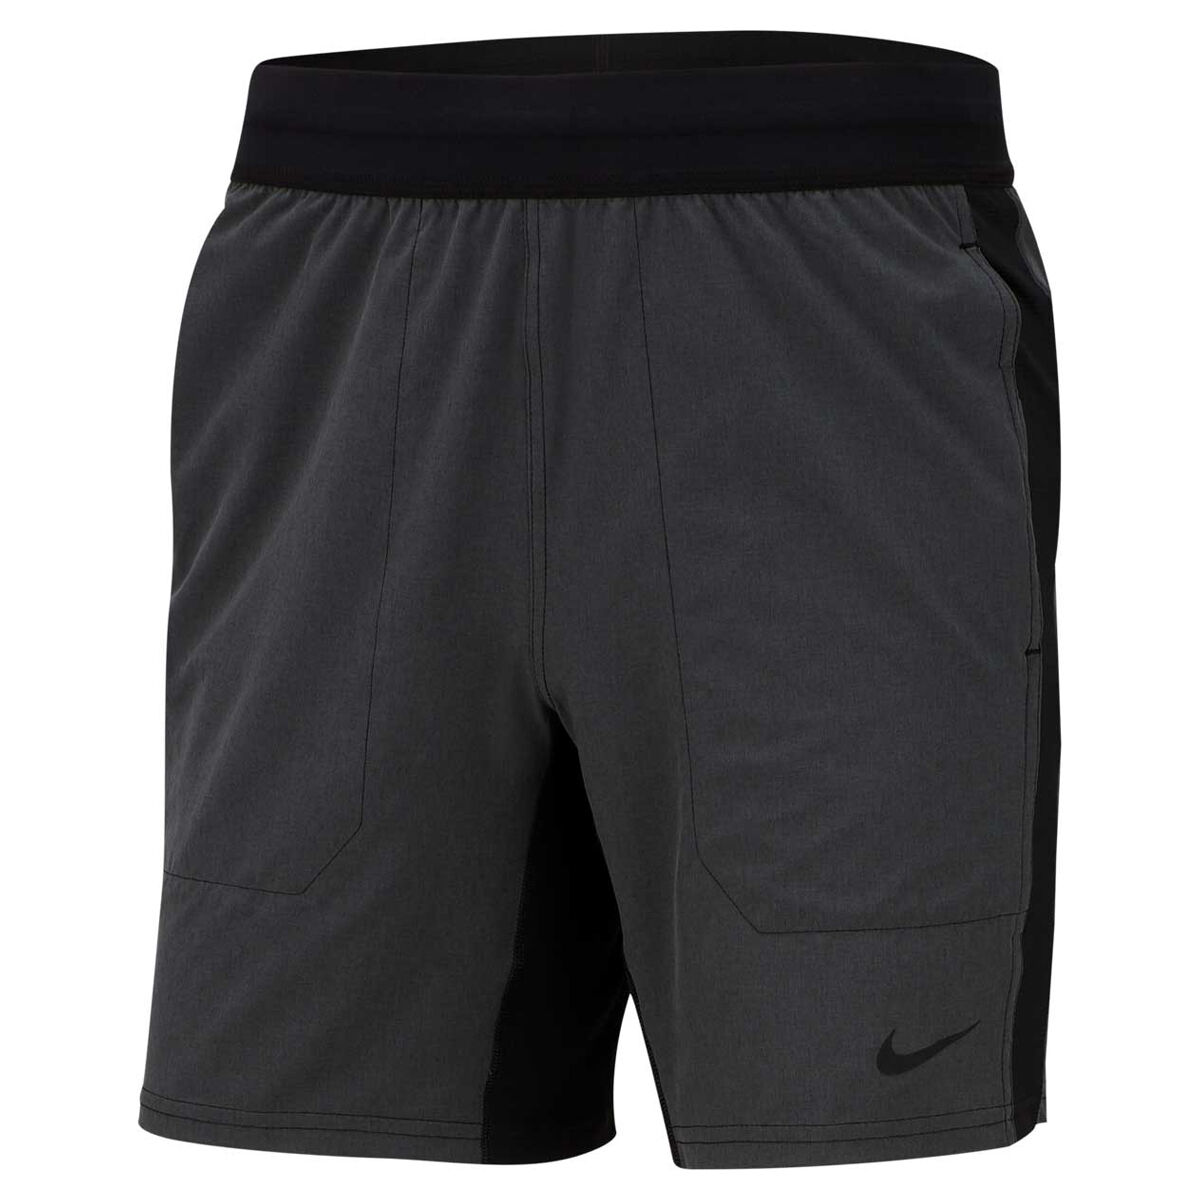 nike men's flex active shorts